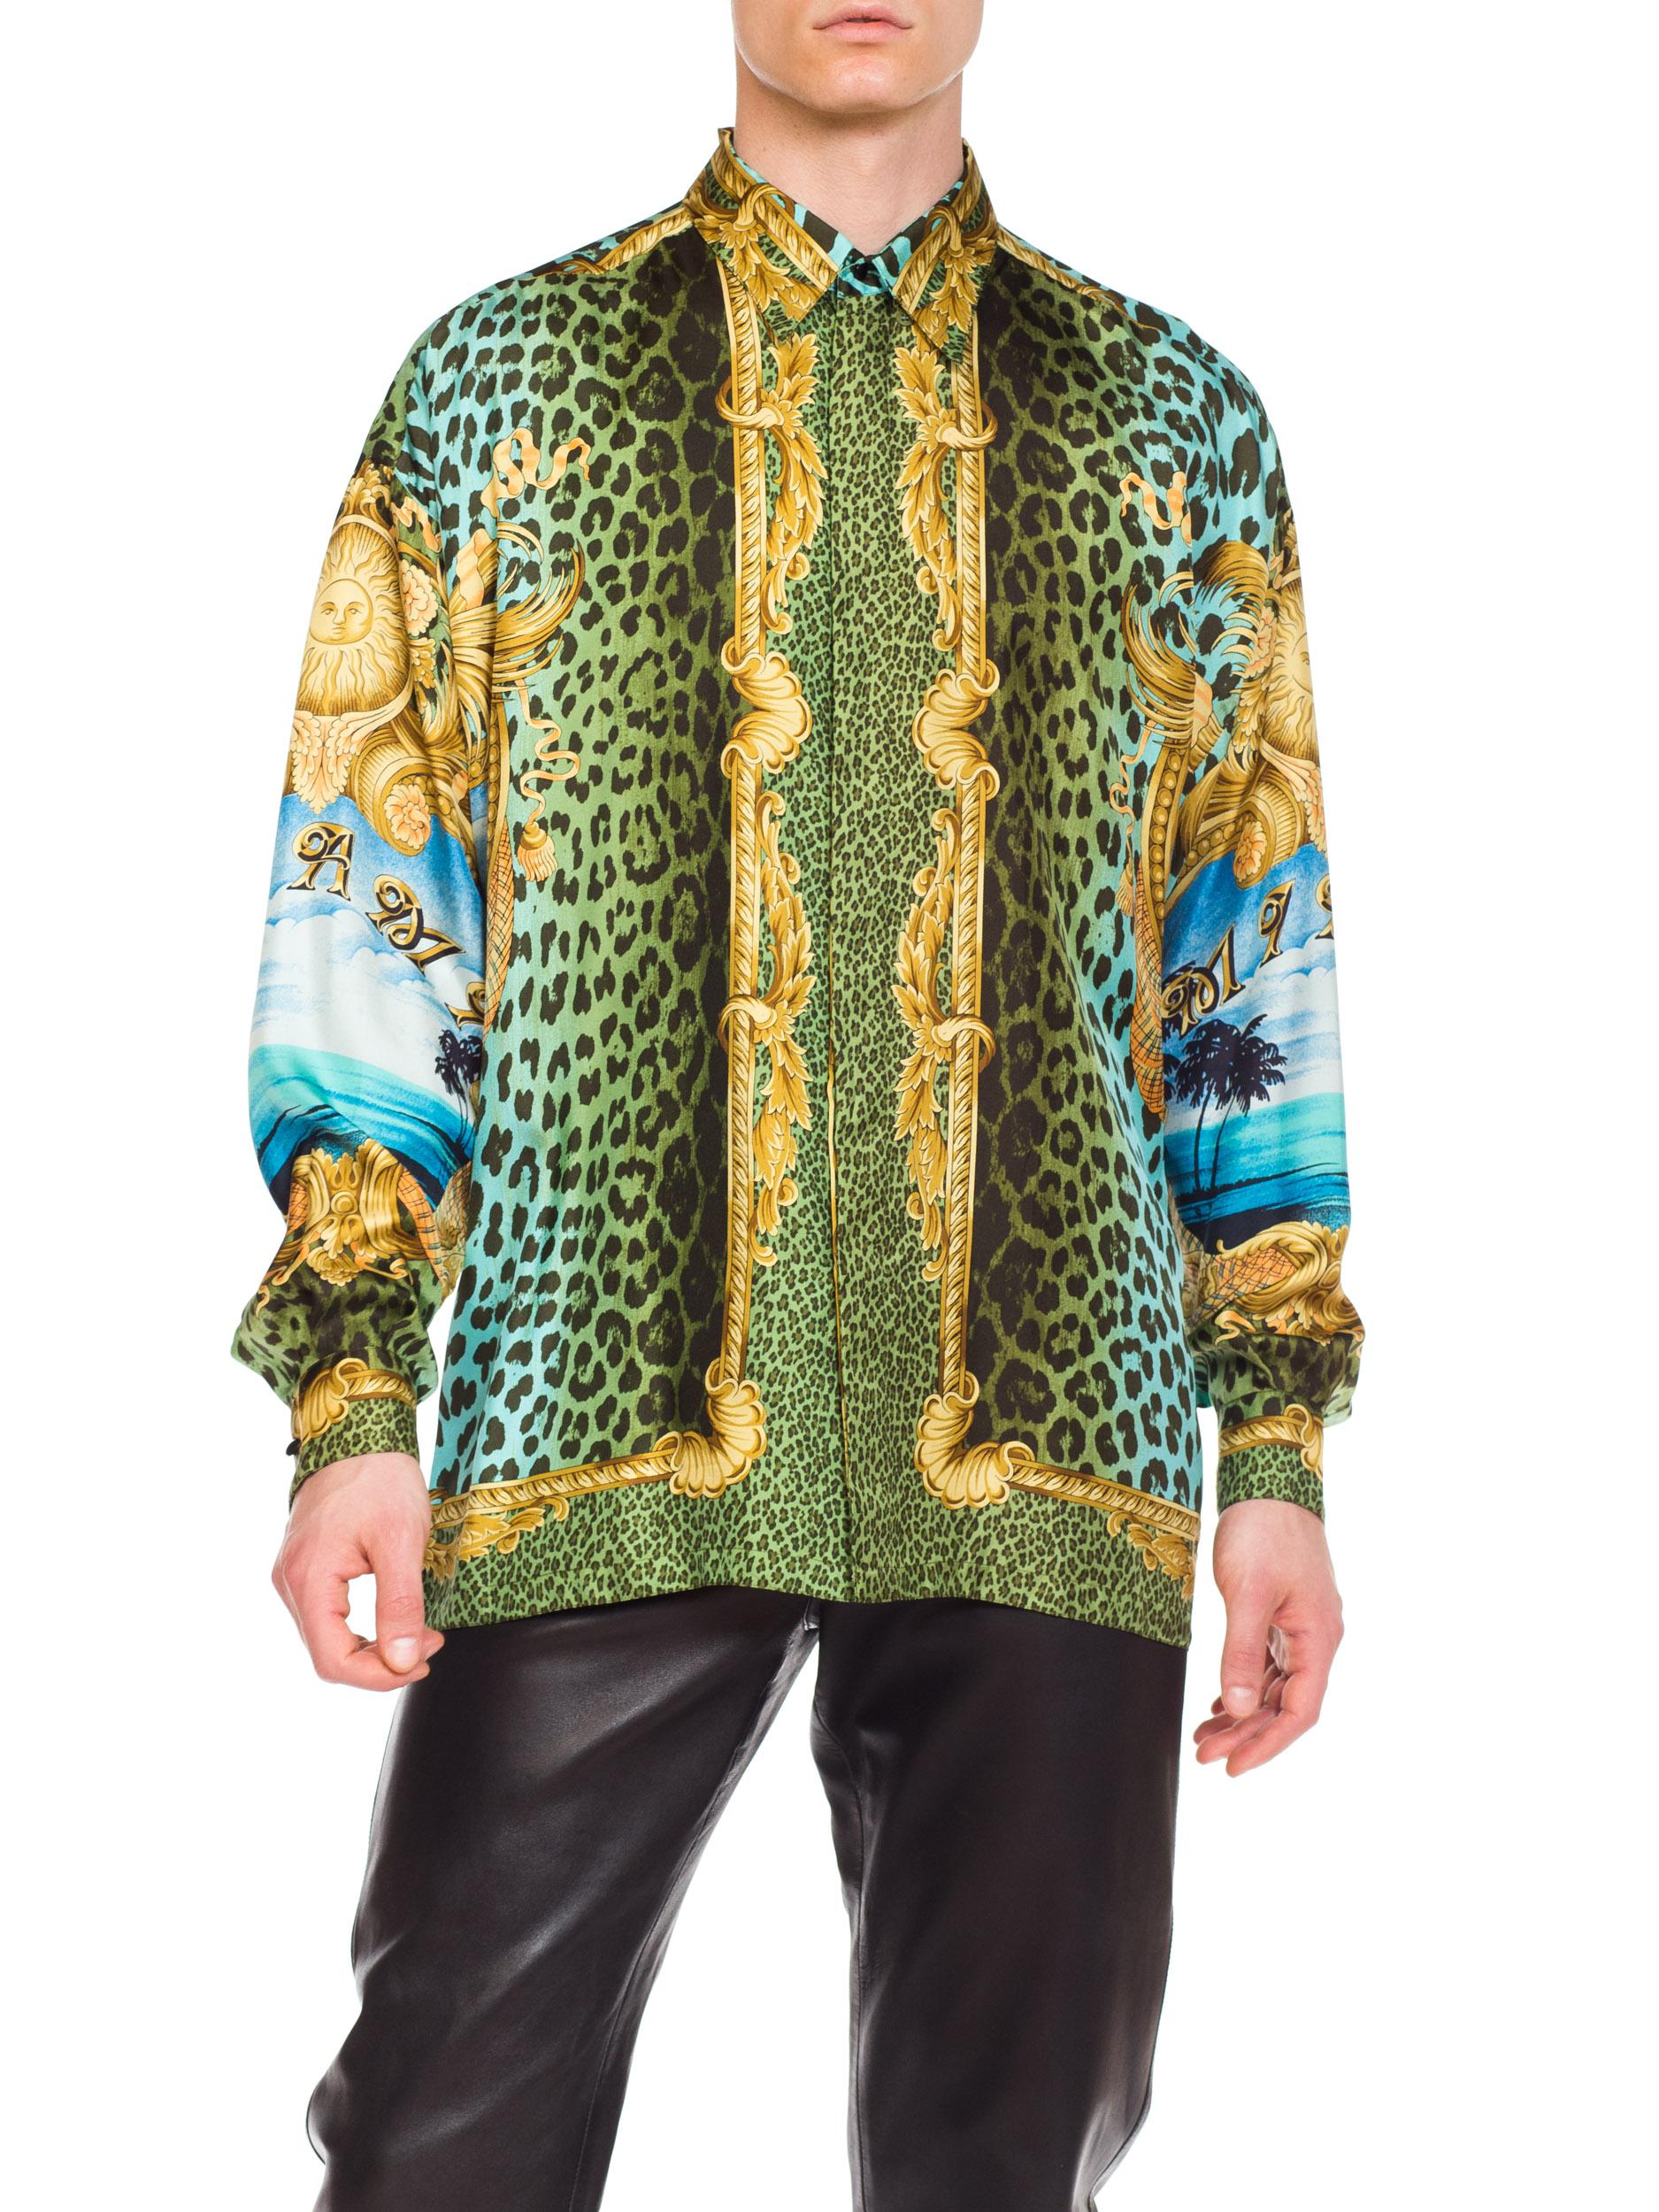 Gianni Versace Miami Leopard Baroque Silk Shirt, 1990s  7